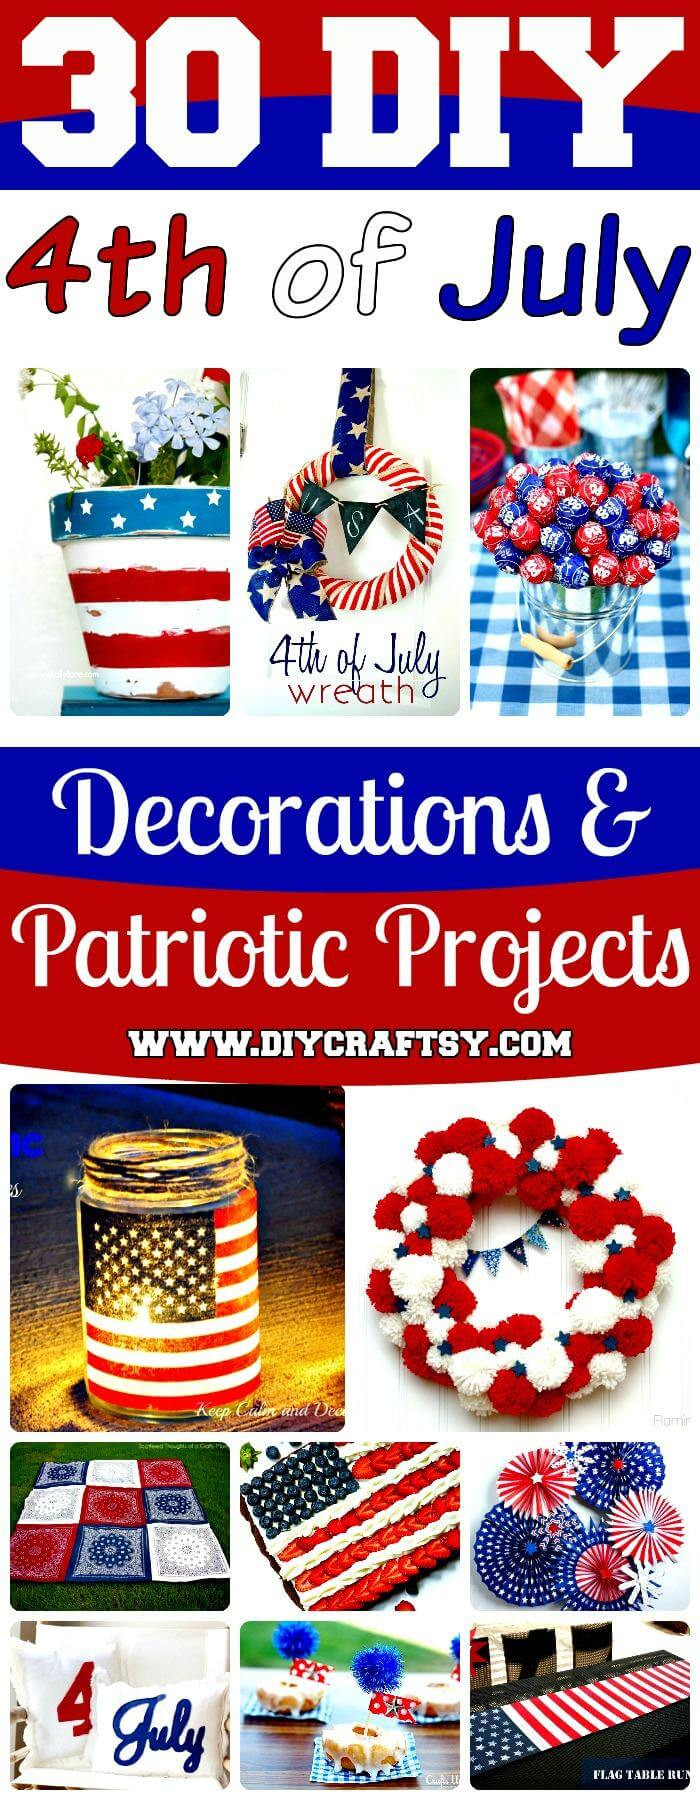 4th Of July Decorations Diy
 30 DIY 4th of July Decorations Patriotic DIY Fourth of